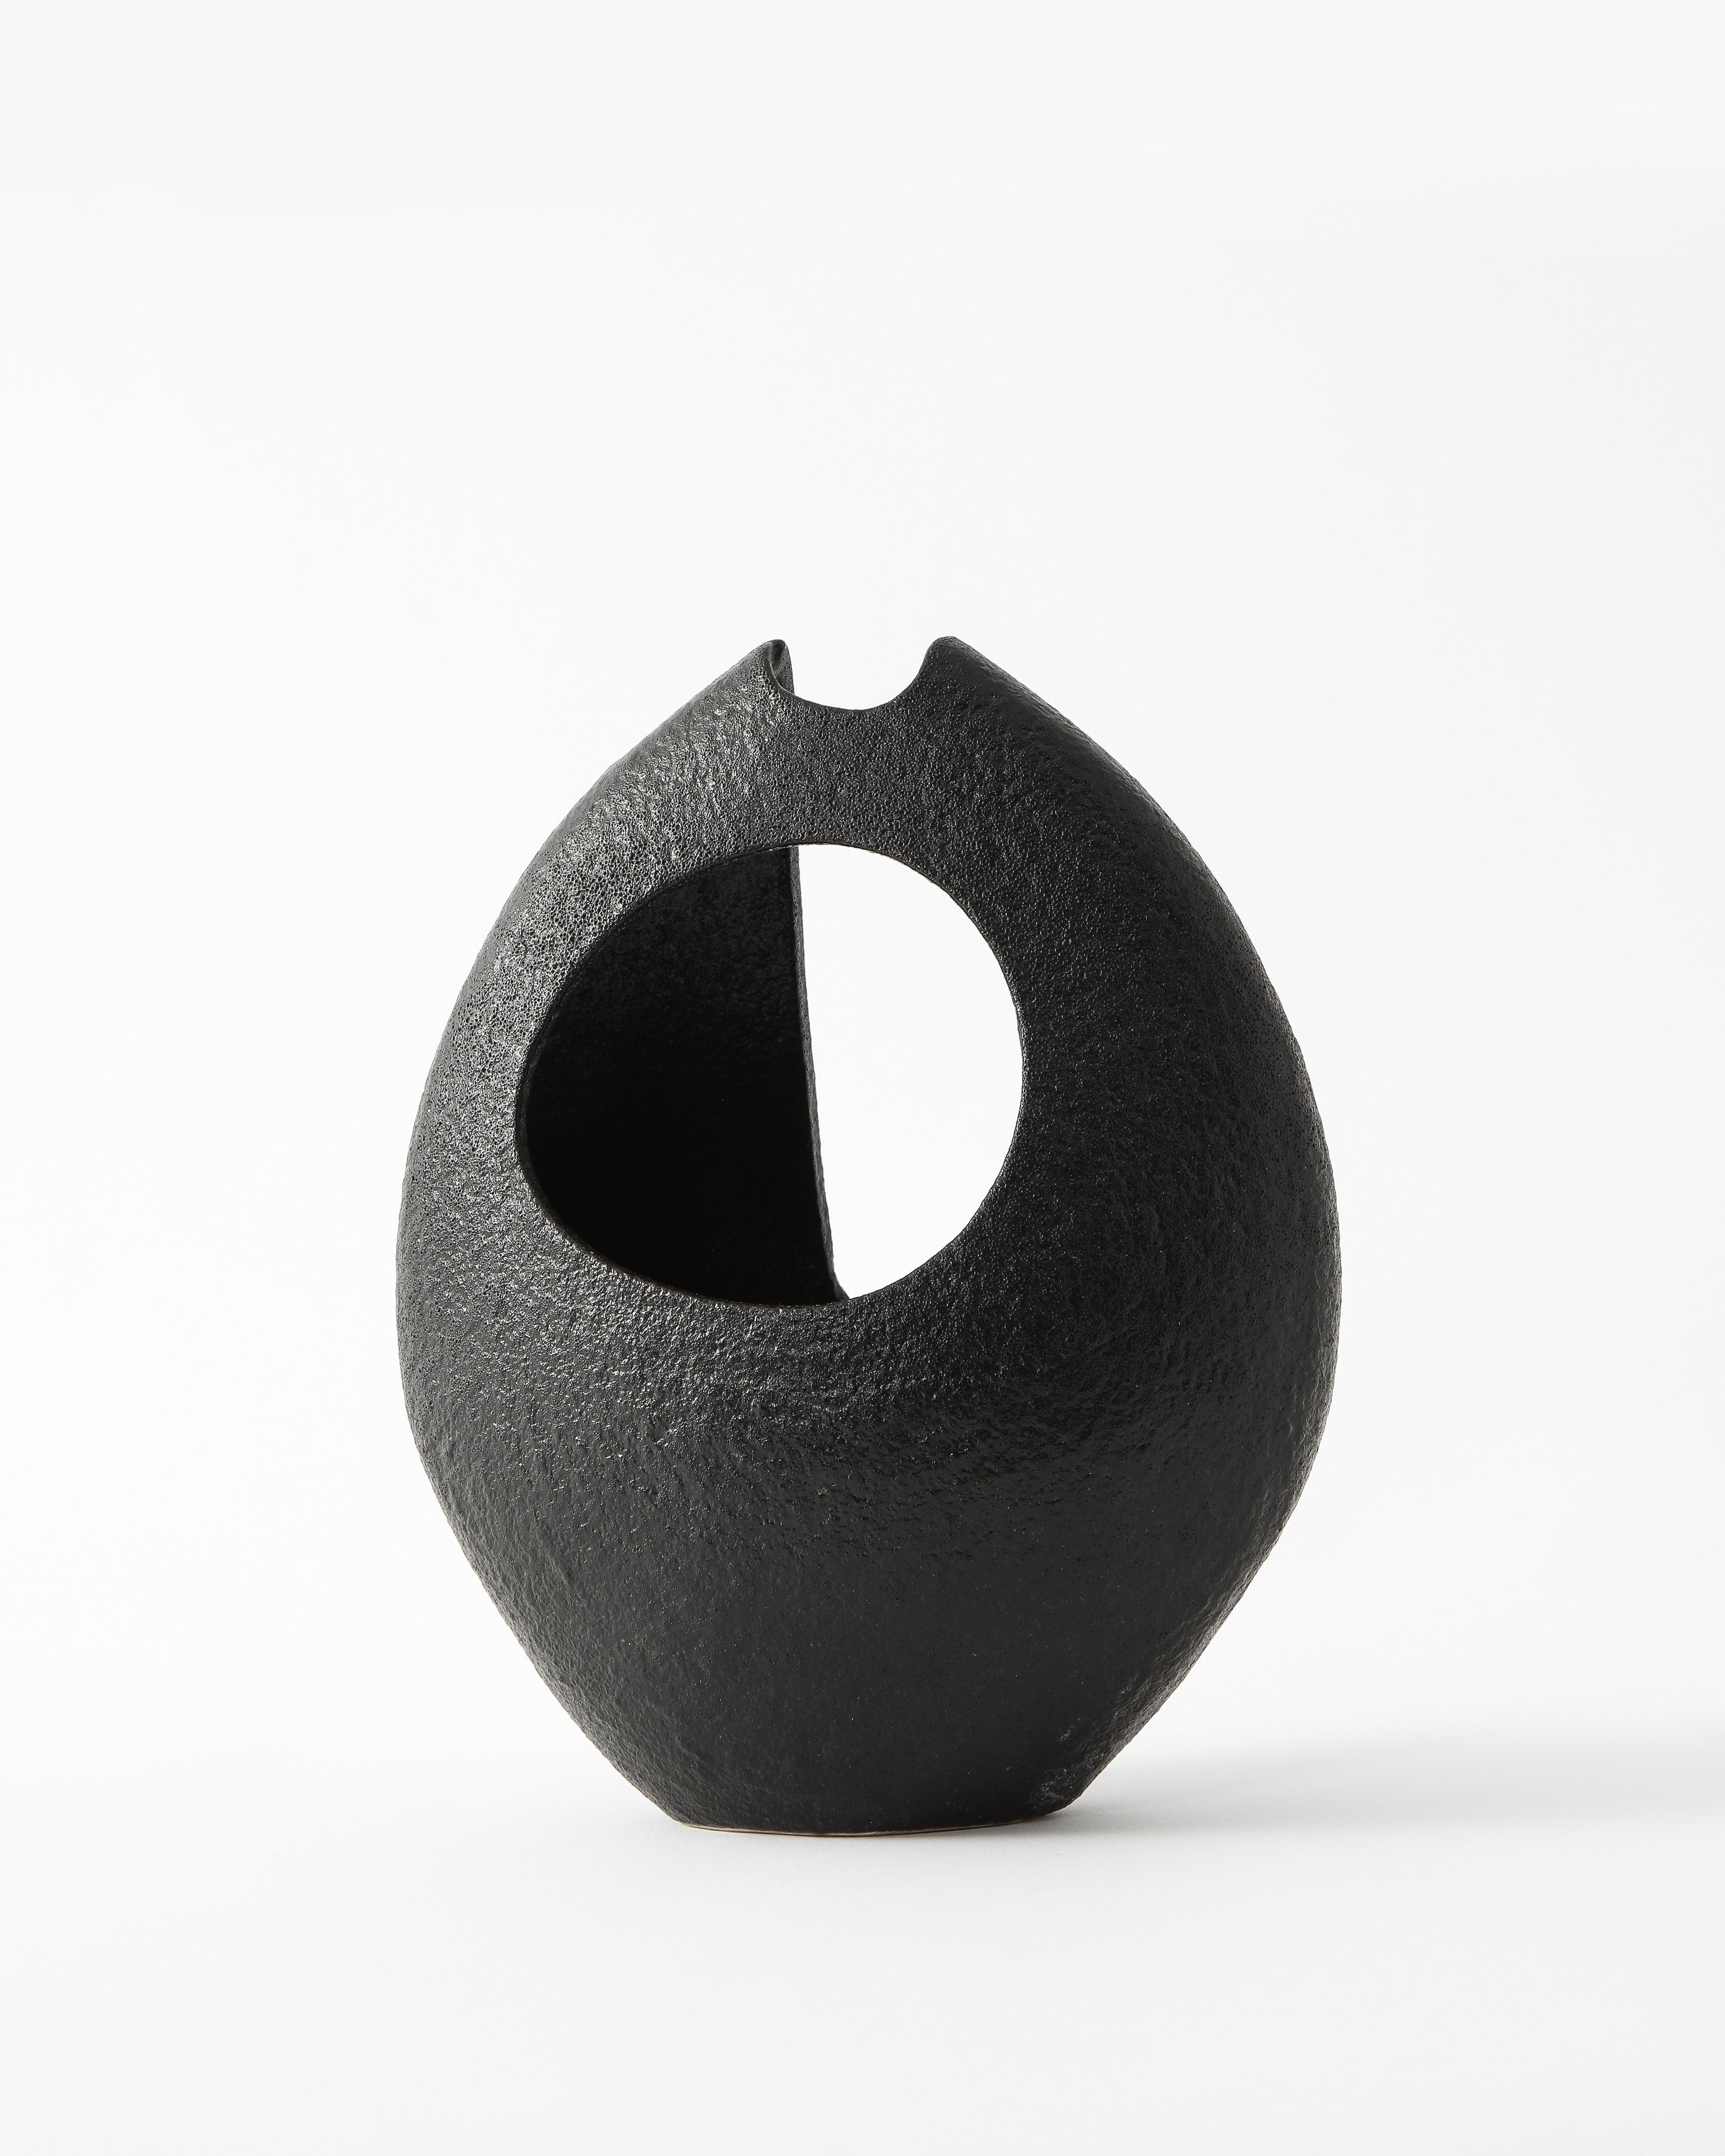 Asymmetrical Almond-Shaped Black Textured Japanese Ceramic Vessel 7